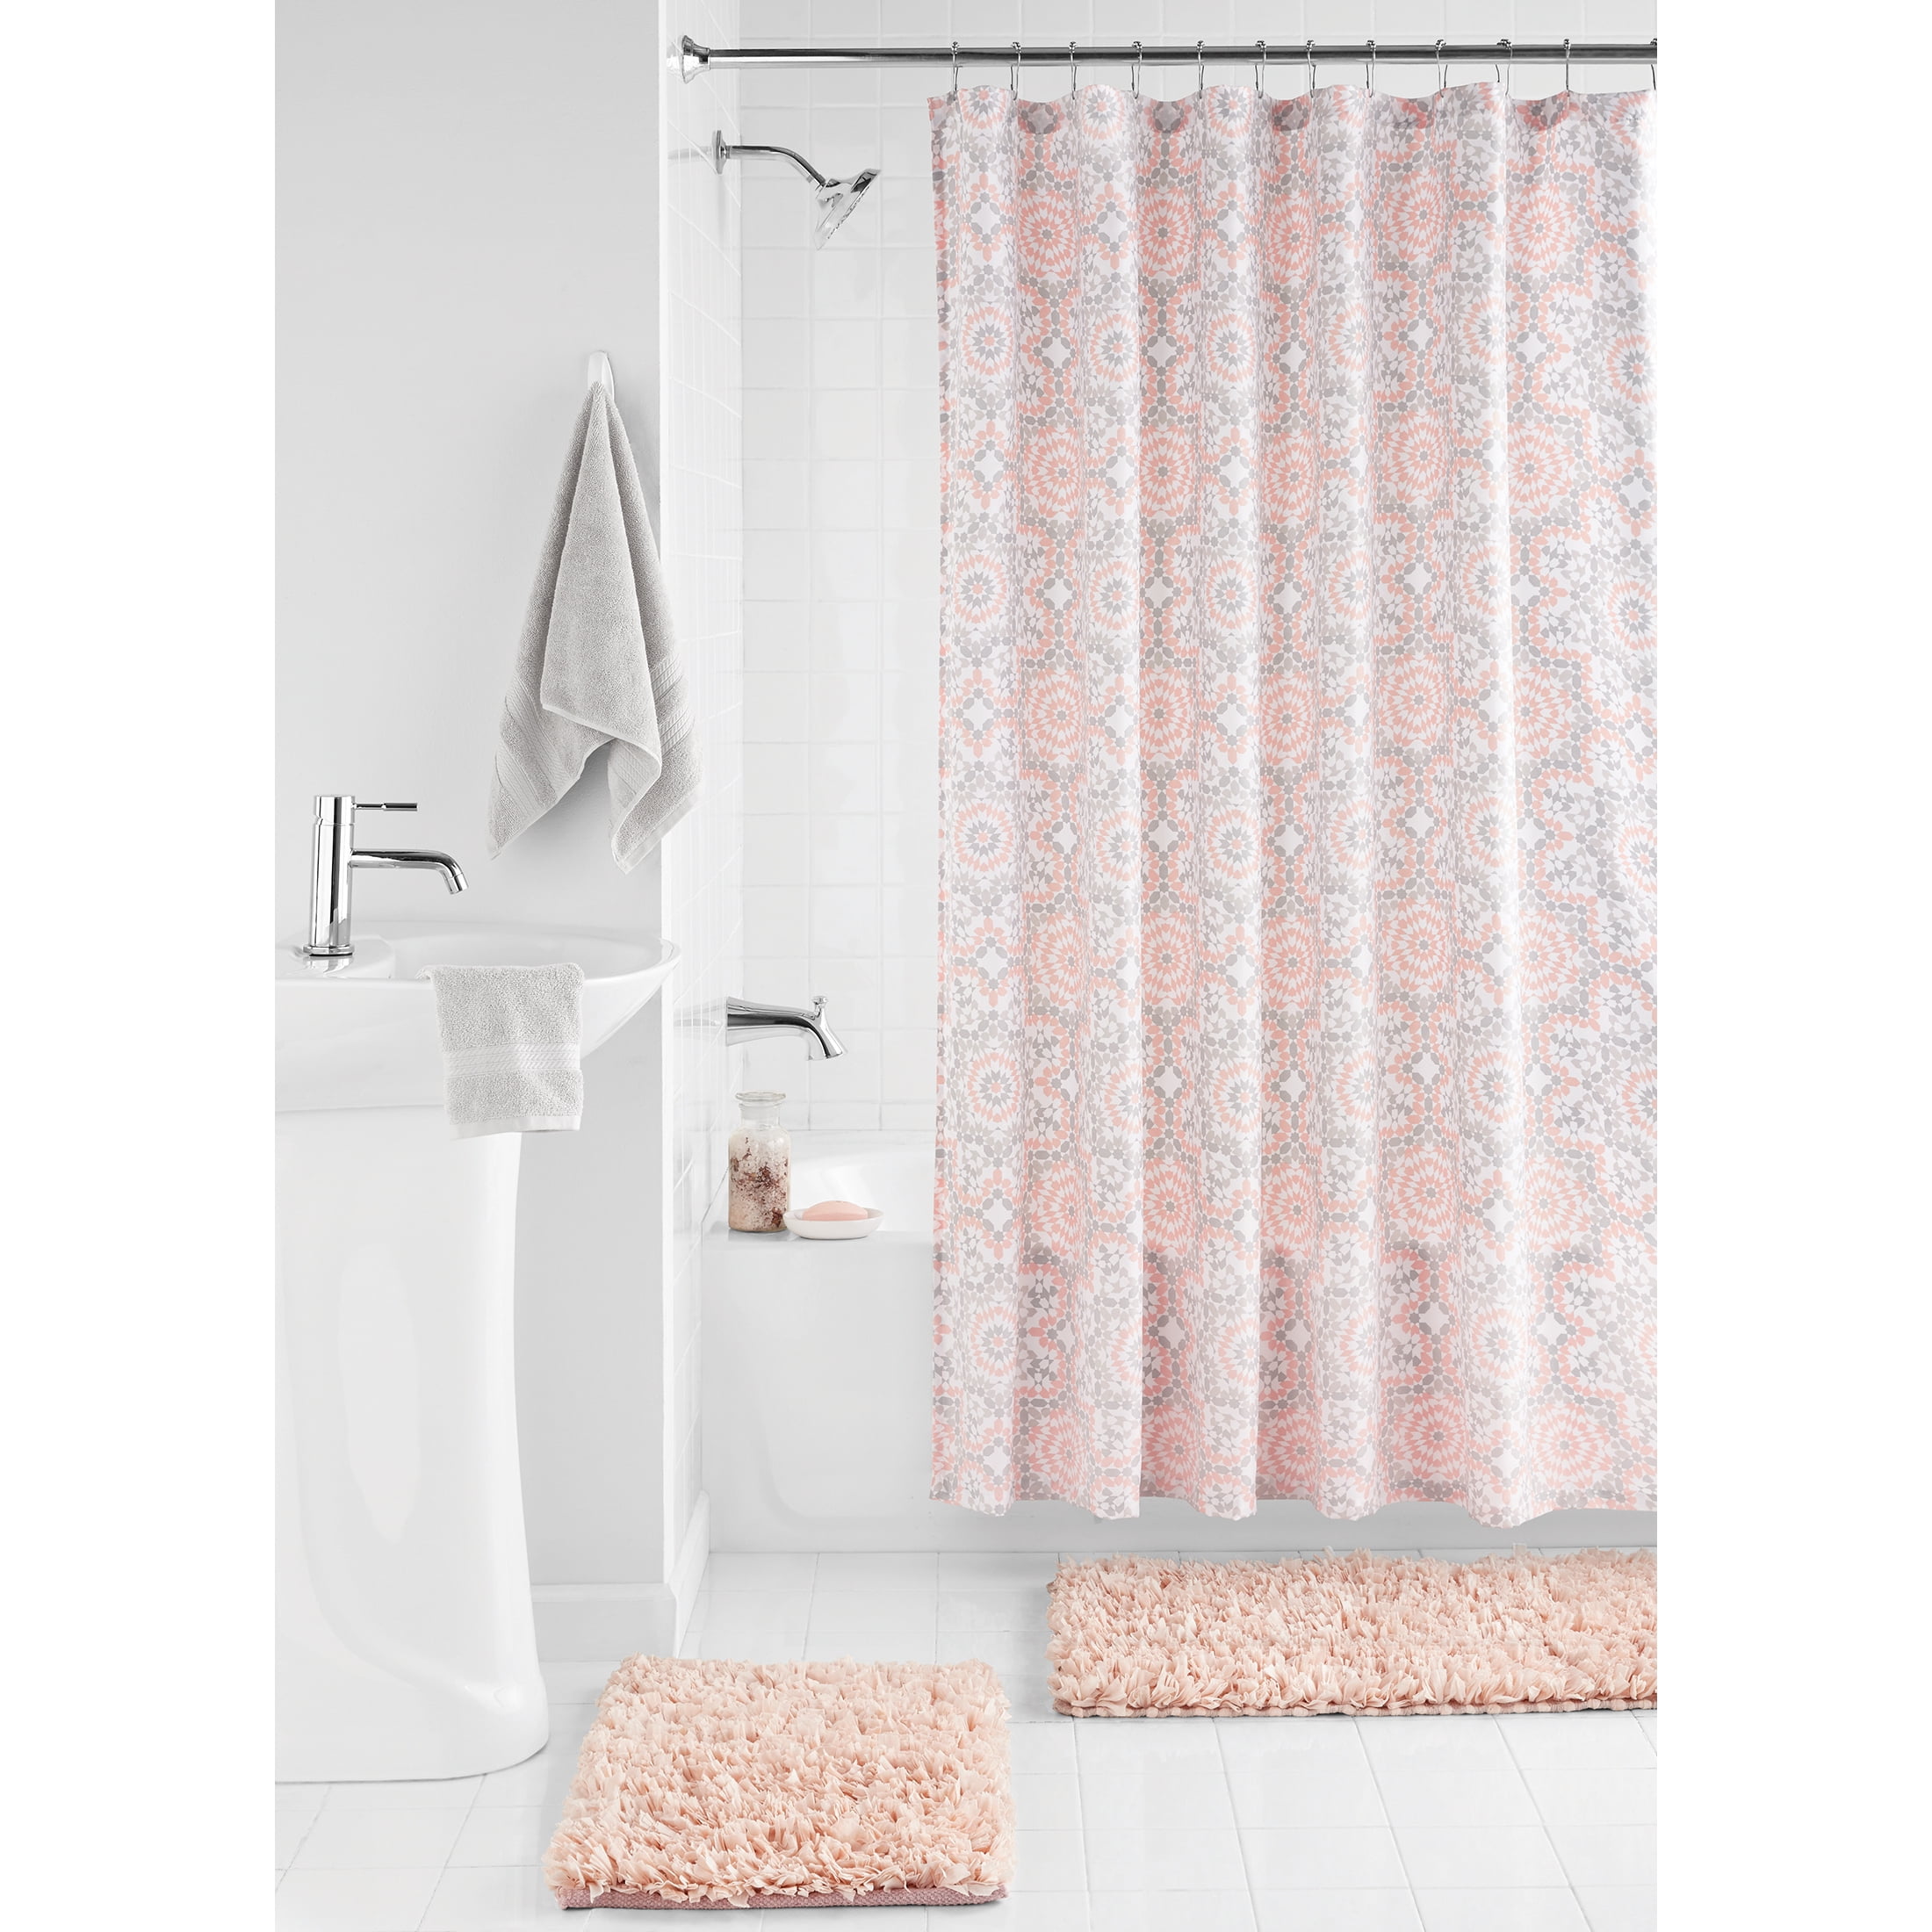 Details about   Farmhouse Striped Bathroom Shower Curtain Hooks Set of 12 